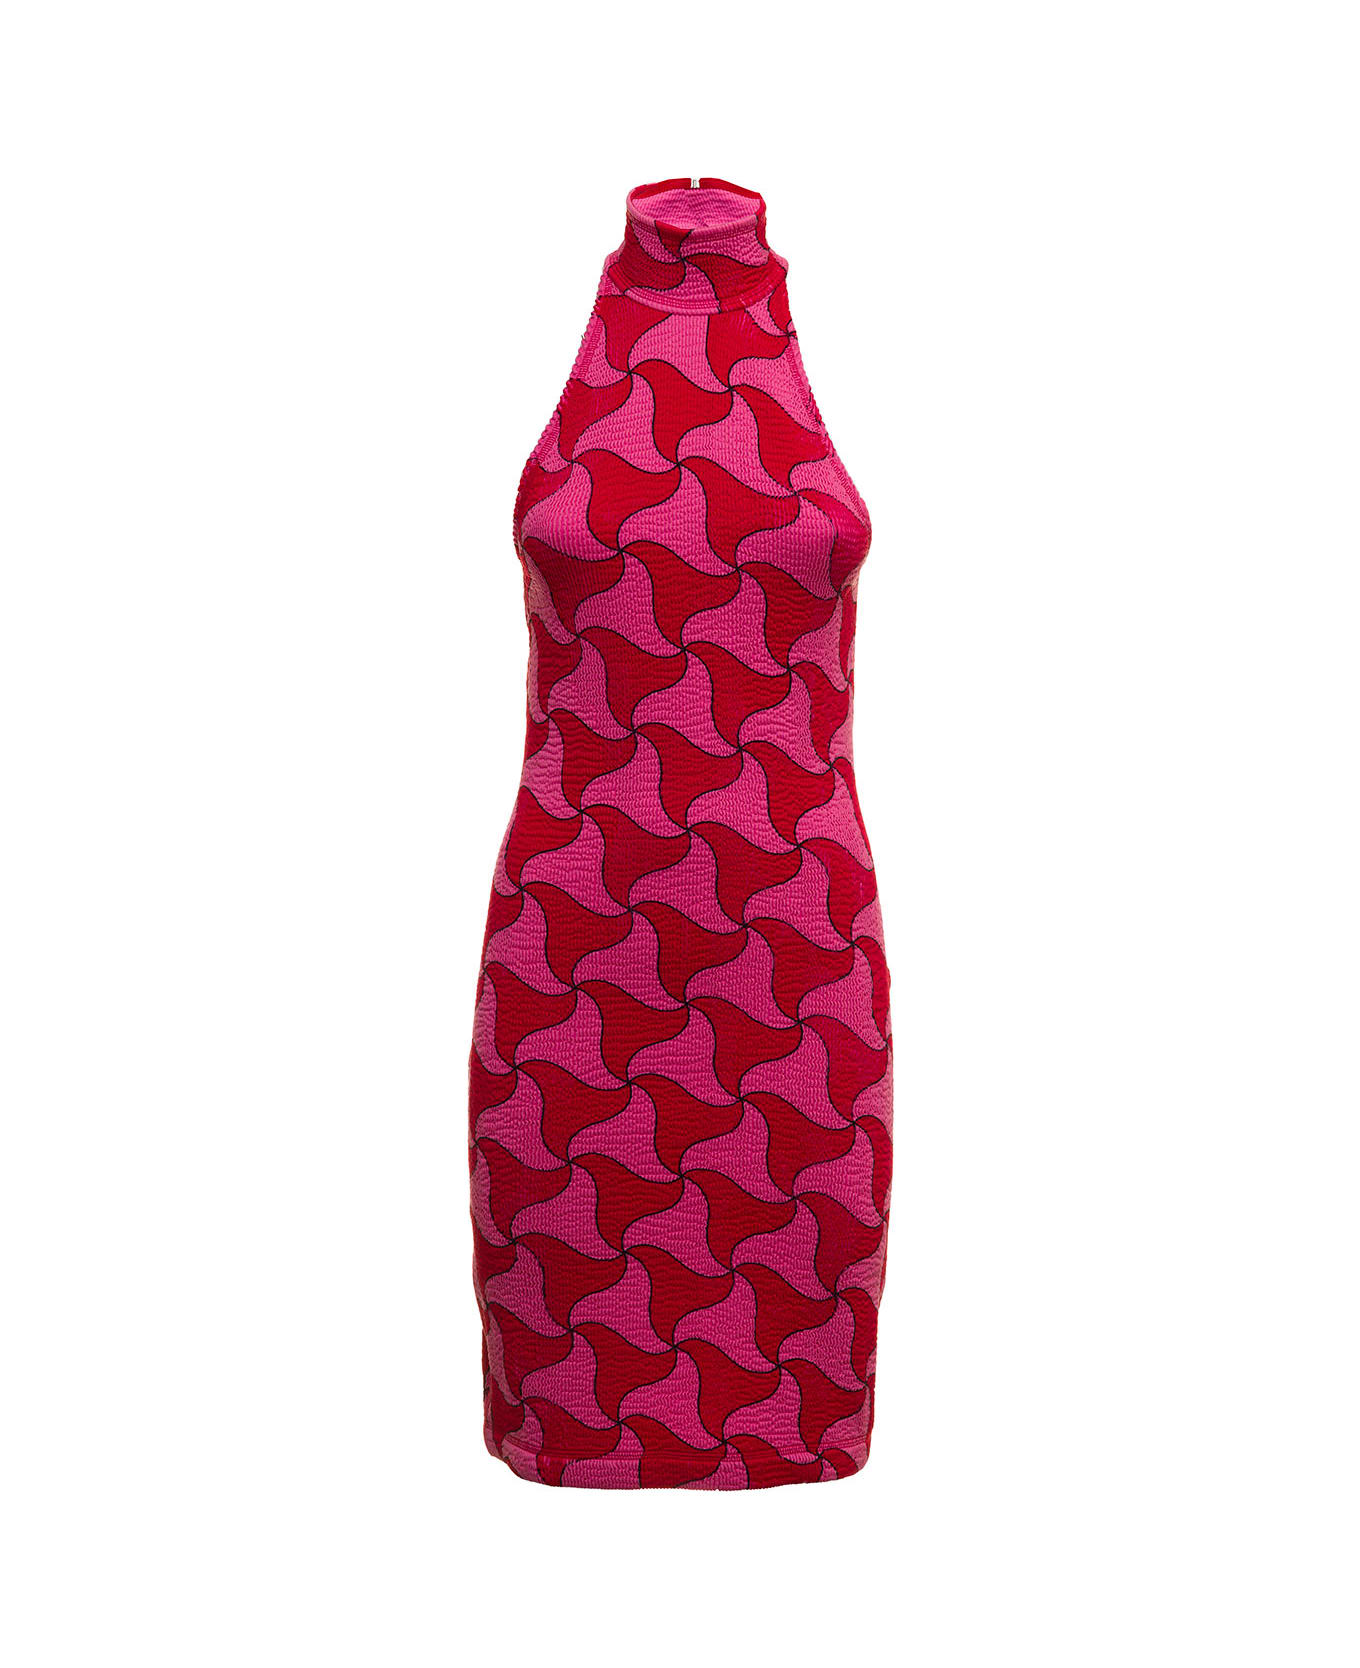 Bottega Veneta Woman's Crinkled Nylon Dress With Wavy Triangle